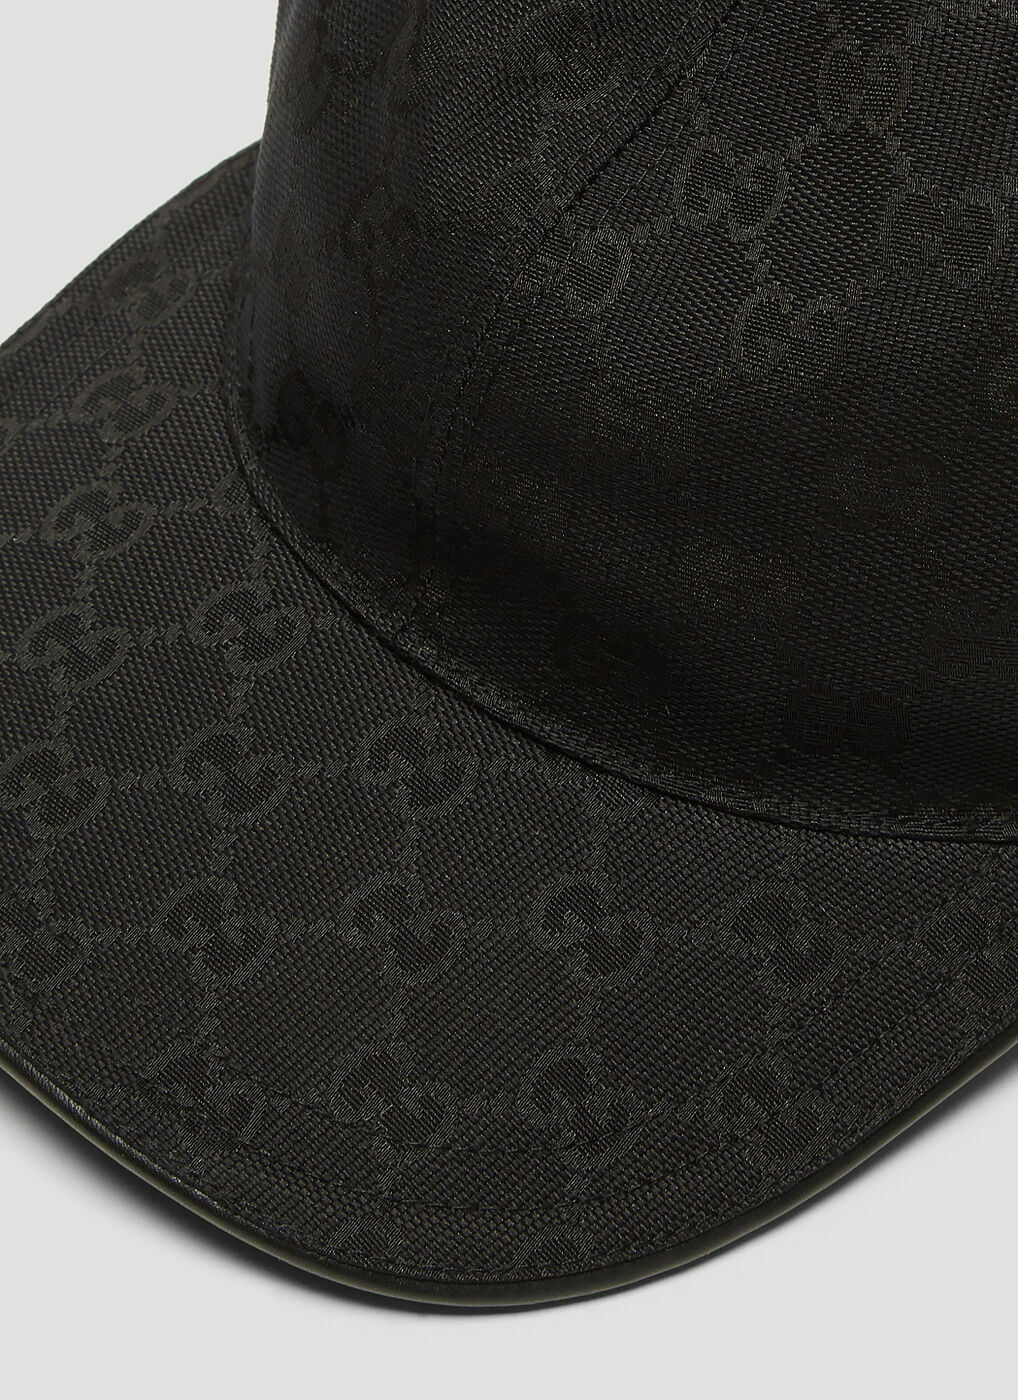 Original GG Canvas Web Baseball Cap in Black Gucci